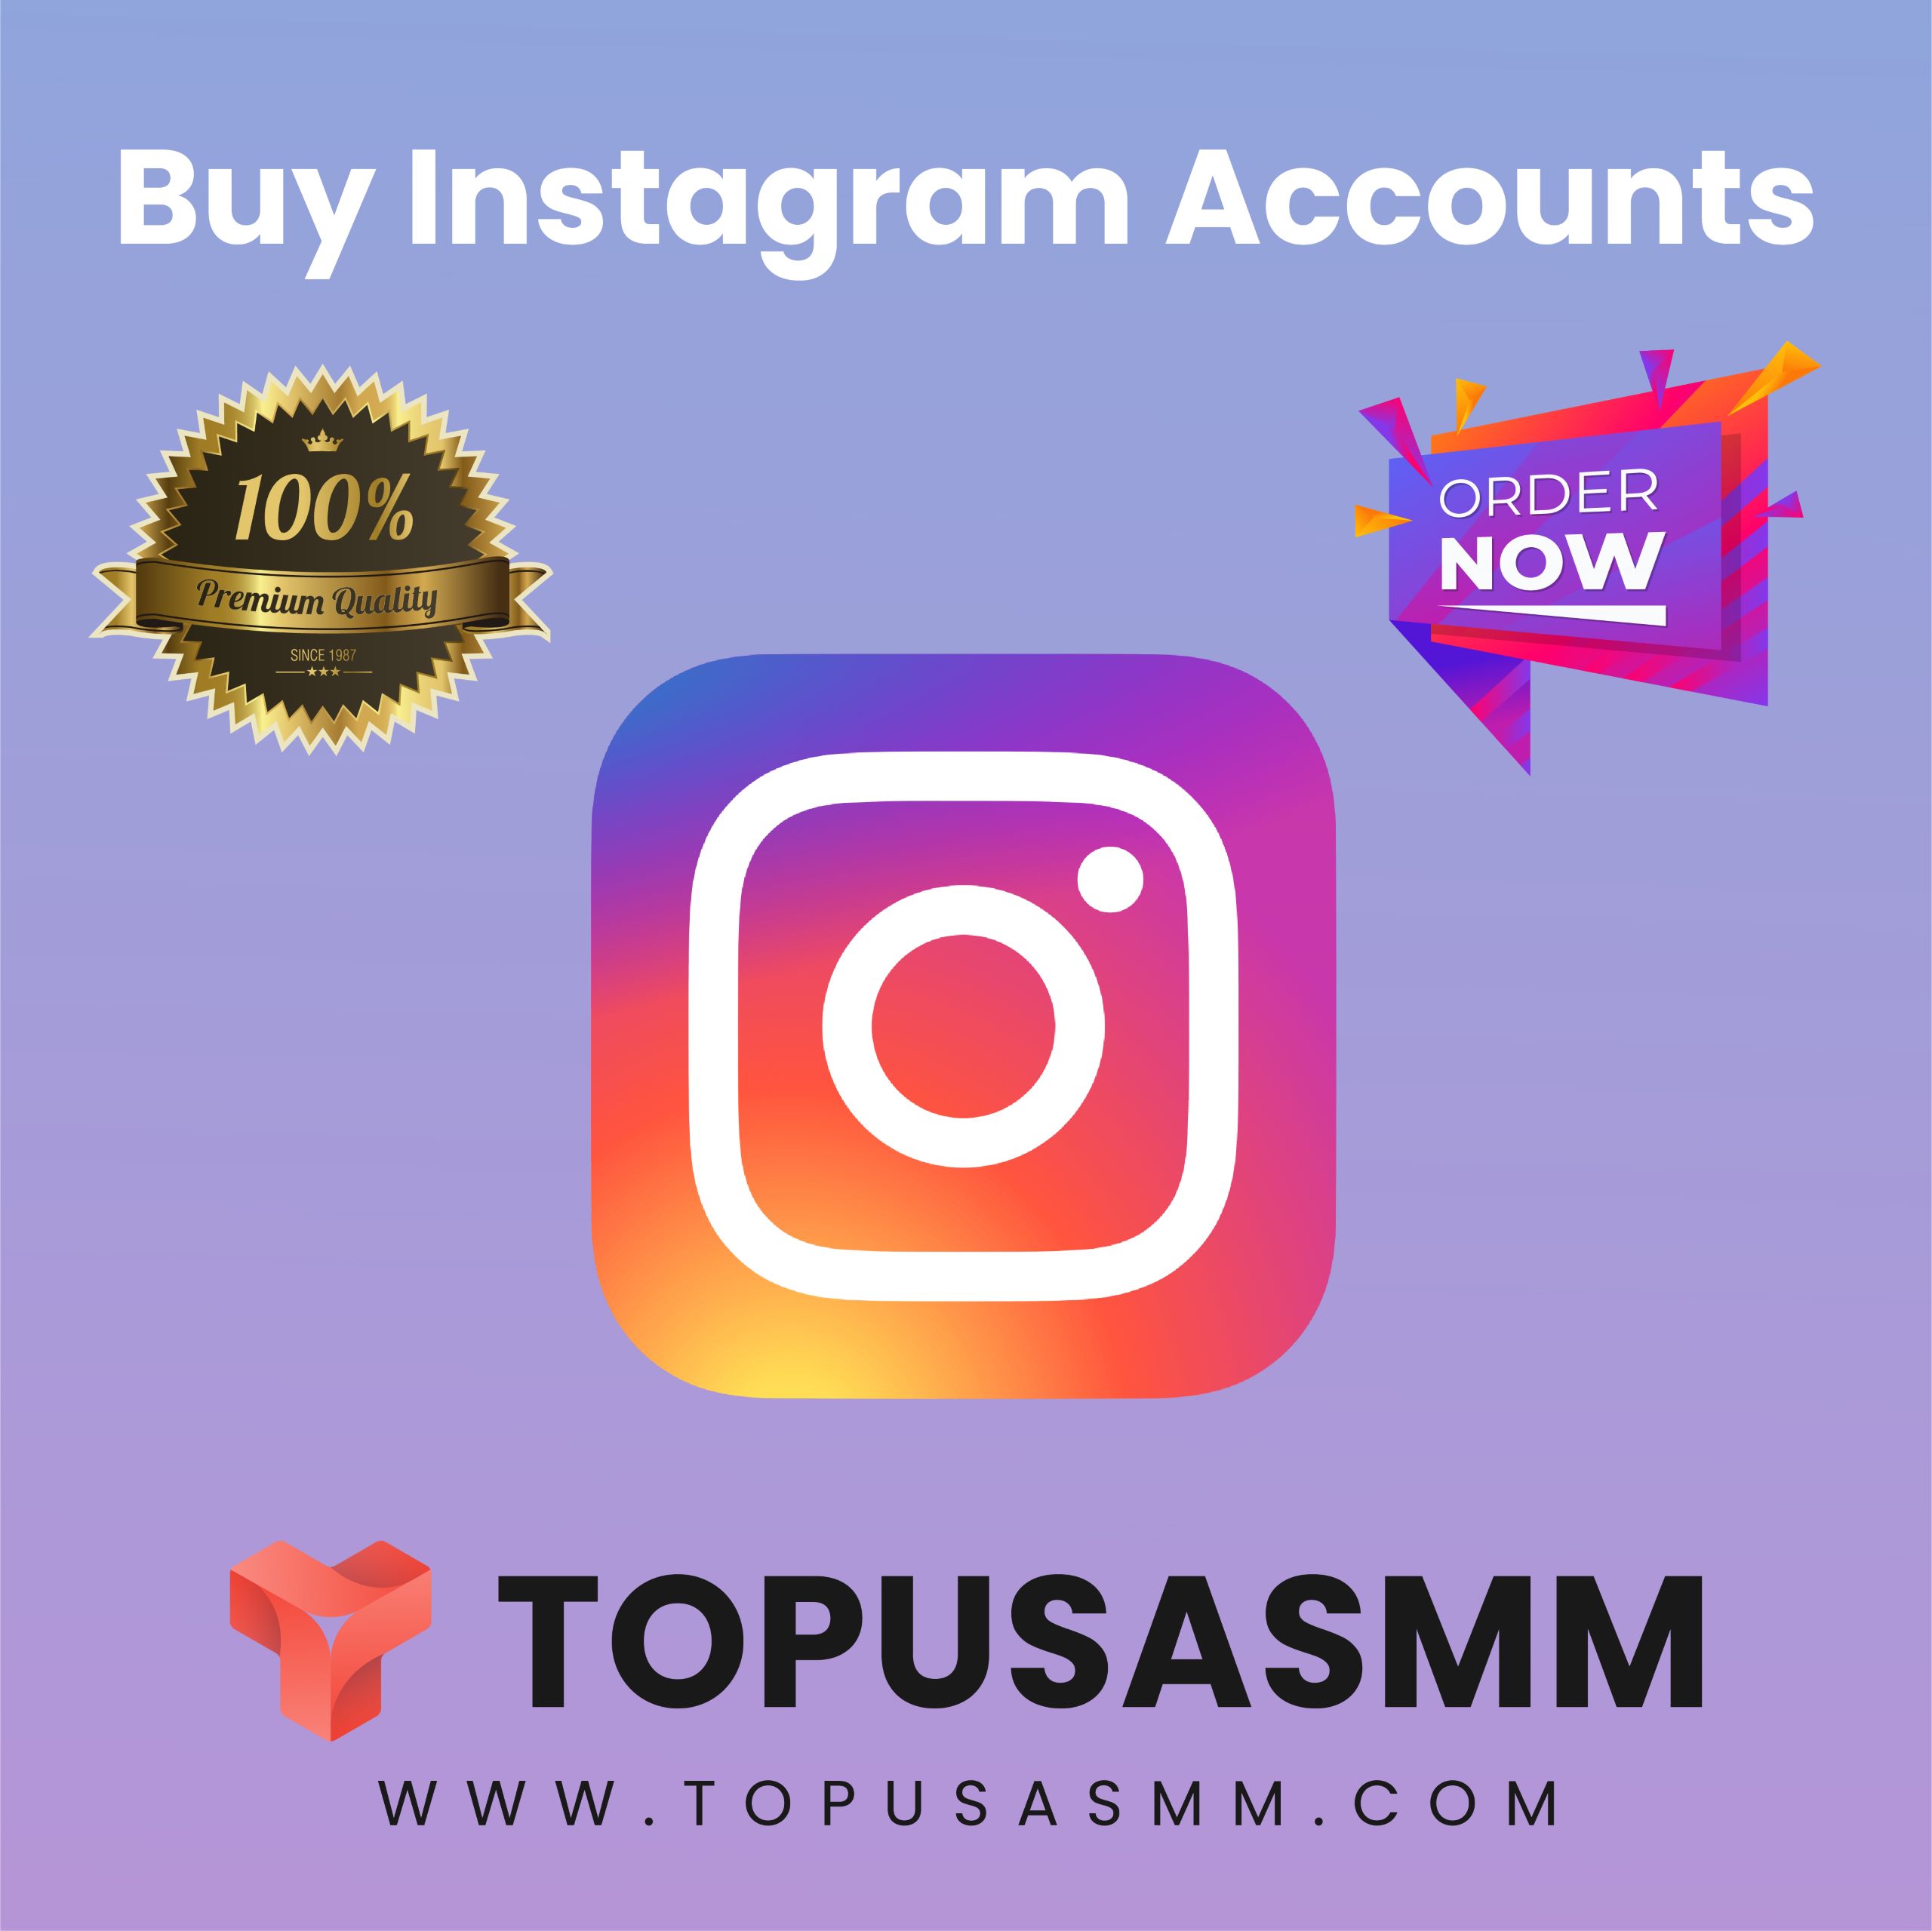 Buy Instagram Accounts - TopUsaSMM